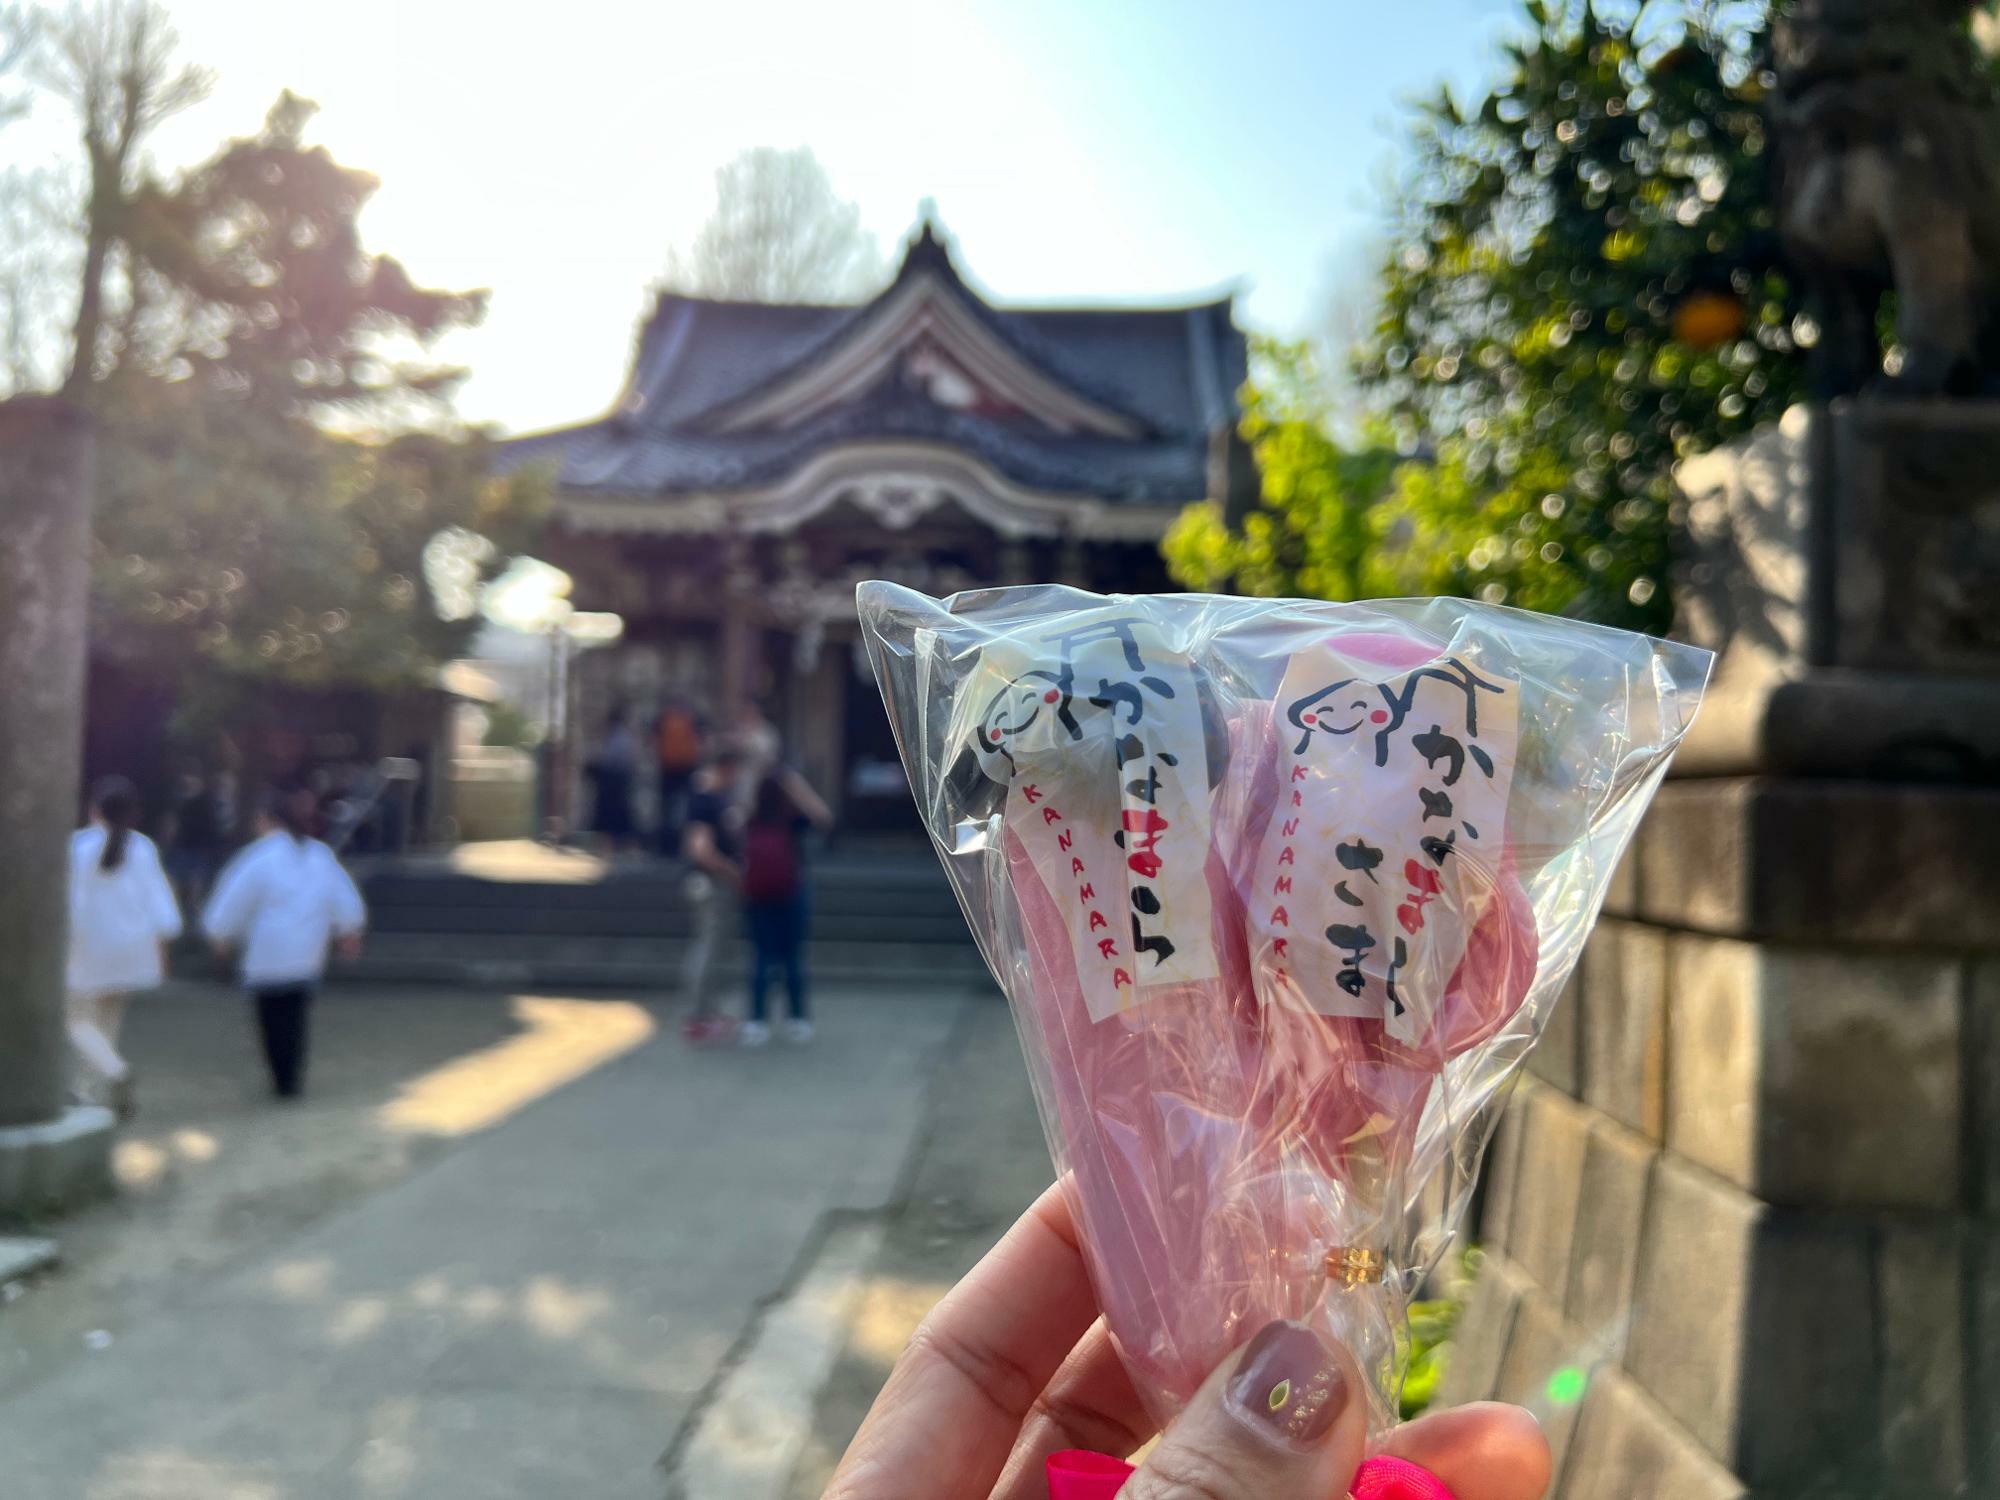 genital-shaped candies. (a pair =1000 yen)